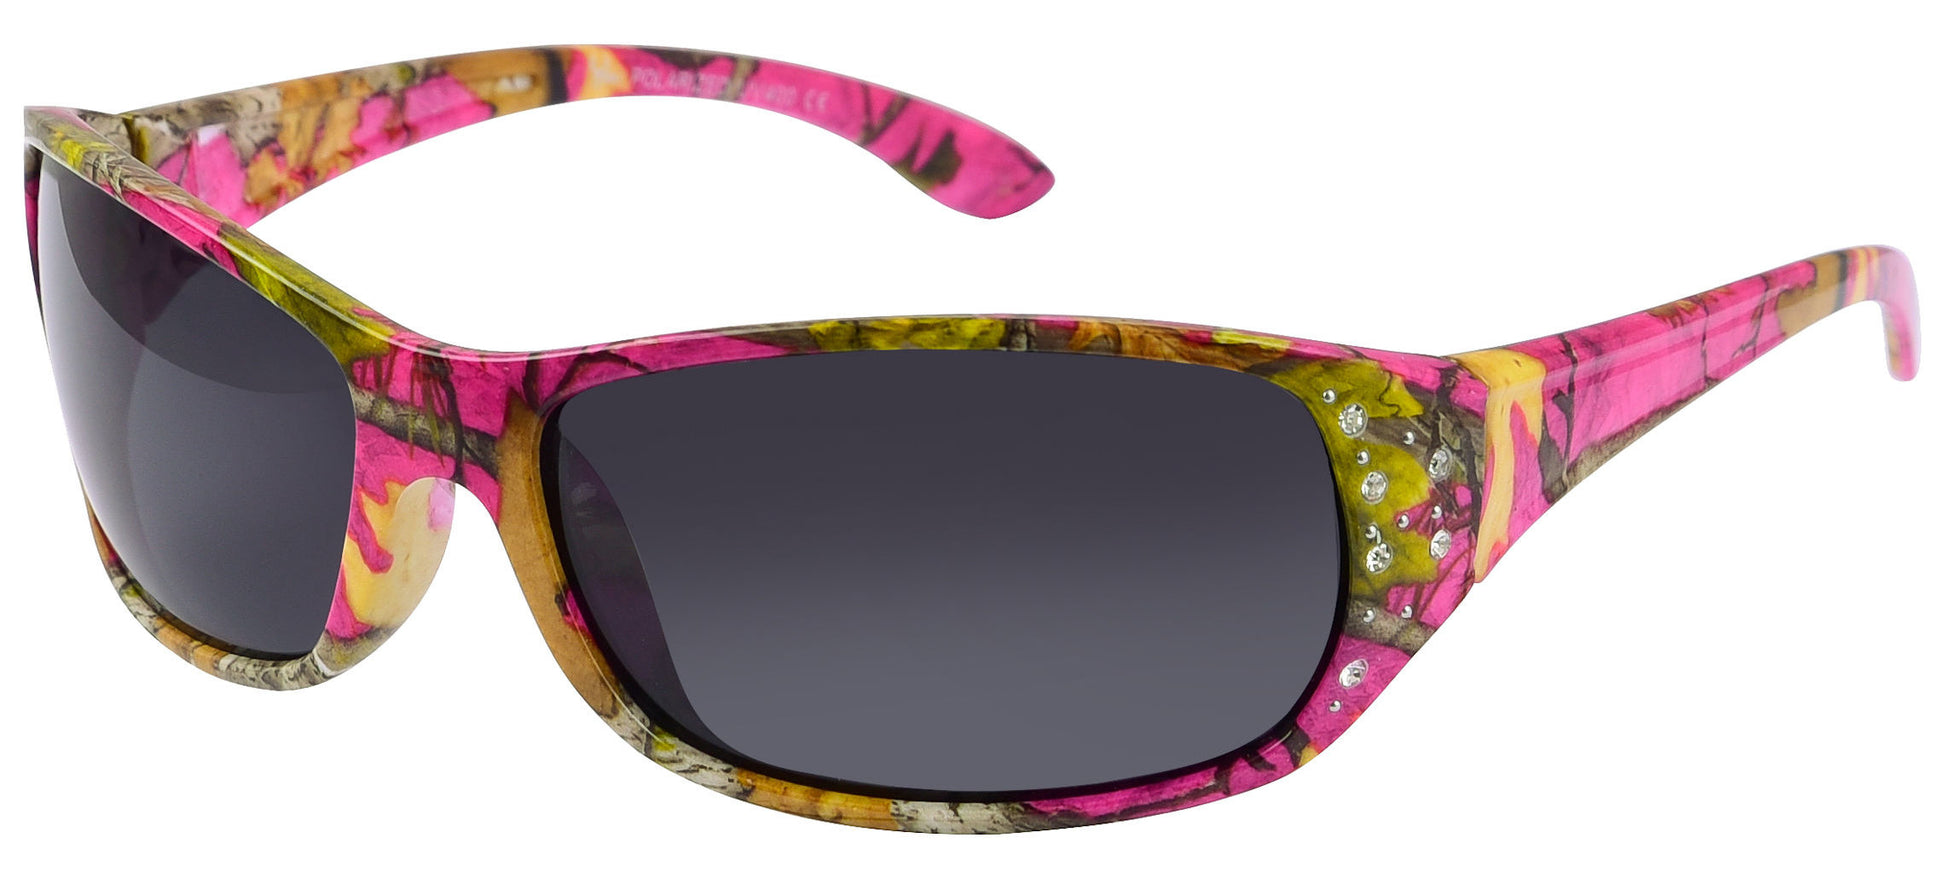 Main image: Polarized Hot Pink Camo Sunglasses for Women - Elettra - Hot Pink Camo Frame - Smoke Lens